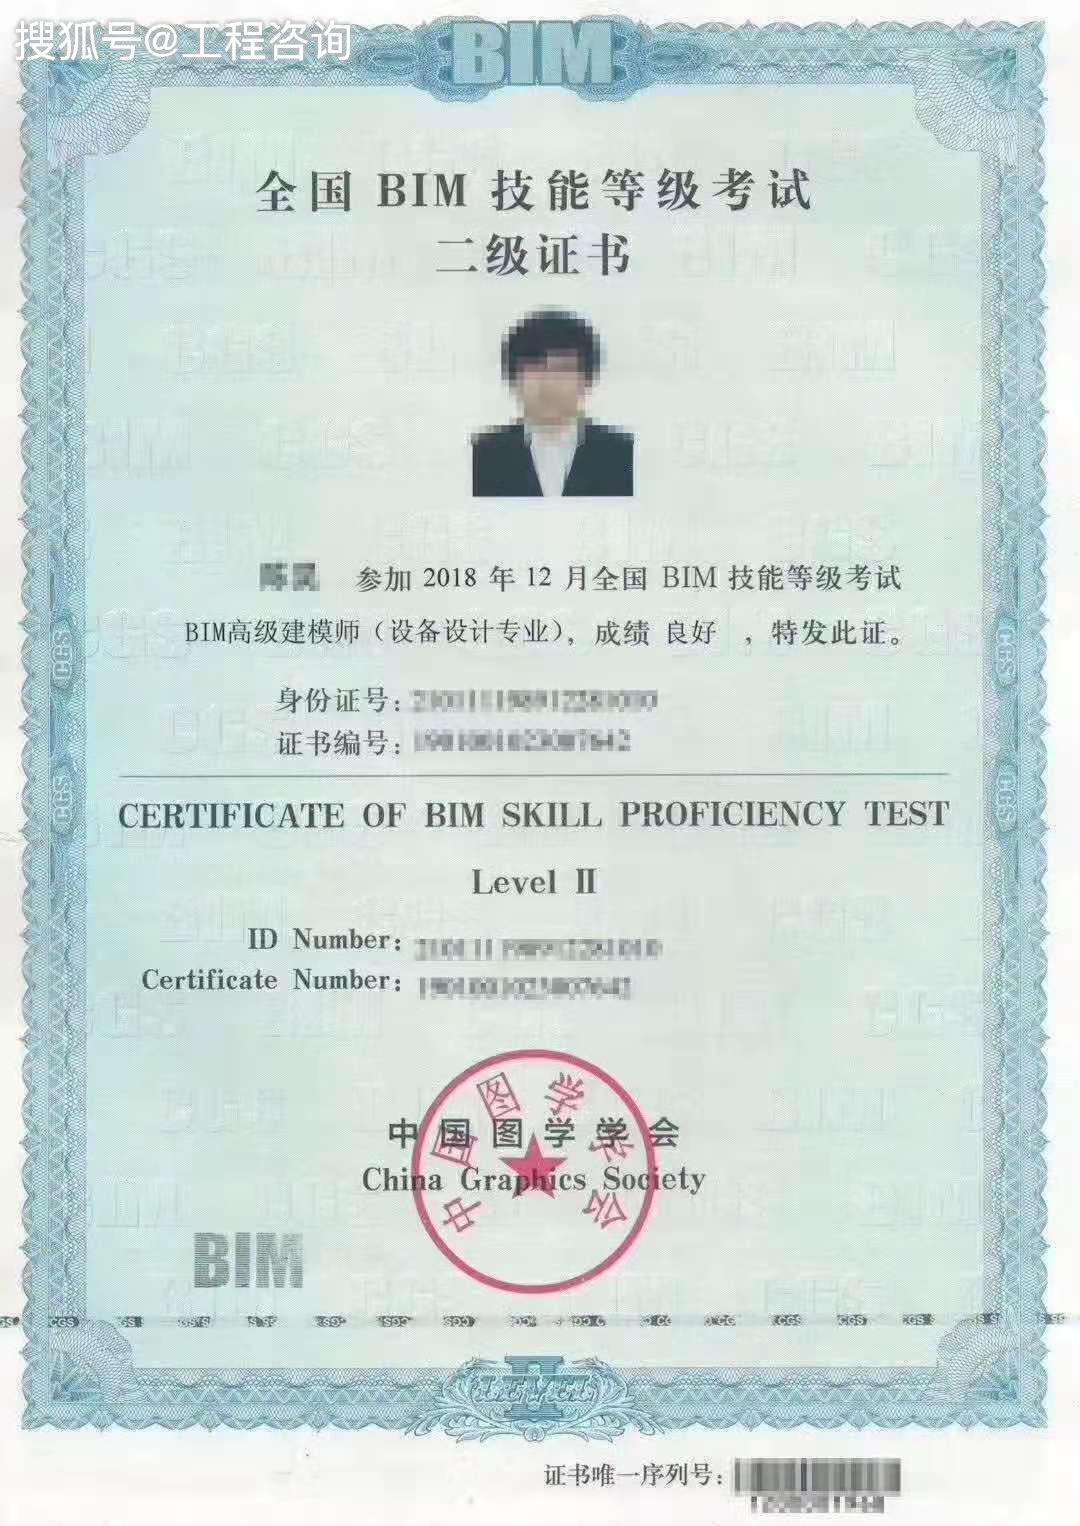 bim是 从事工程和设计行业必备证书和技能,人保部,中国图学学会"双证"